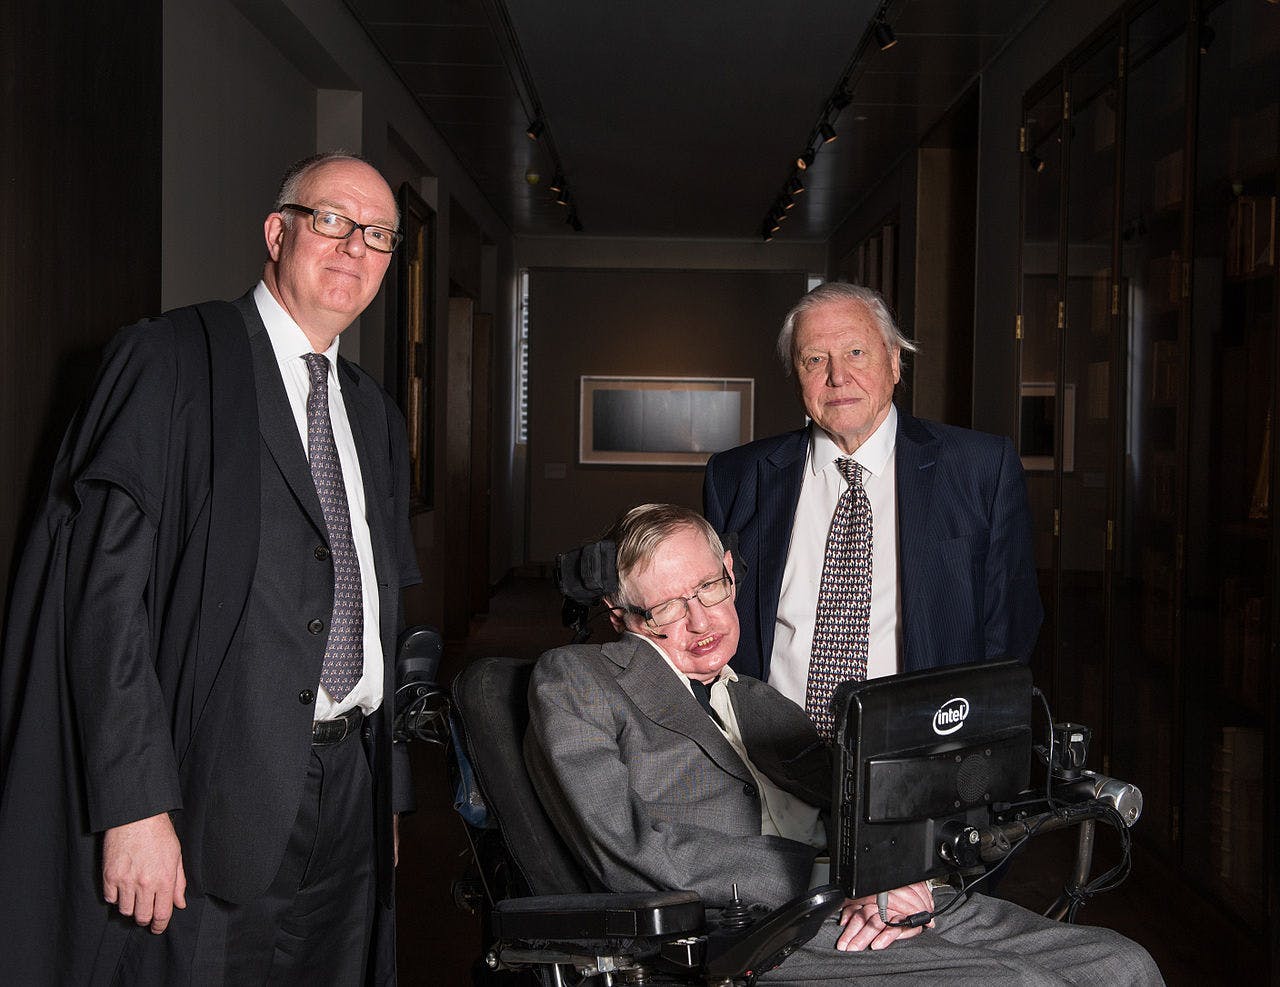 R.I.P. Stephen Hawking